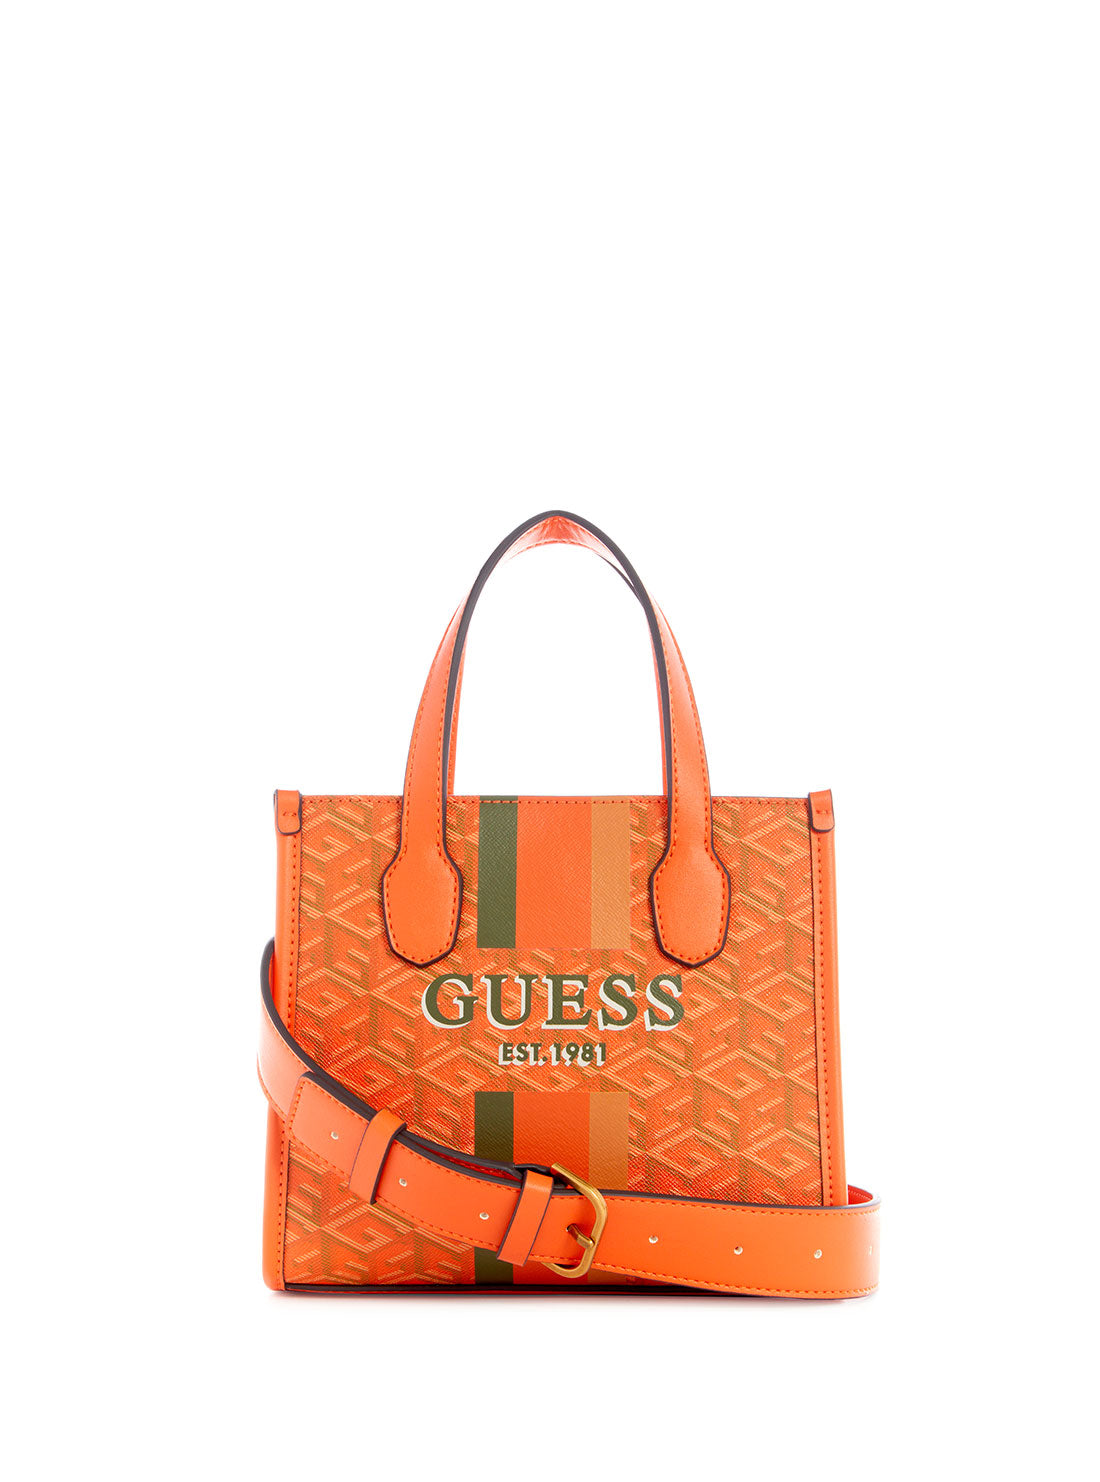 GUESS Women's Orange Logo Silvana Mini Tote Bag SC866577 Front View